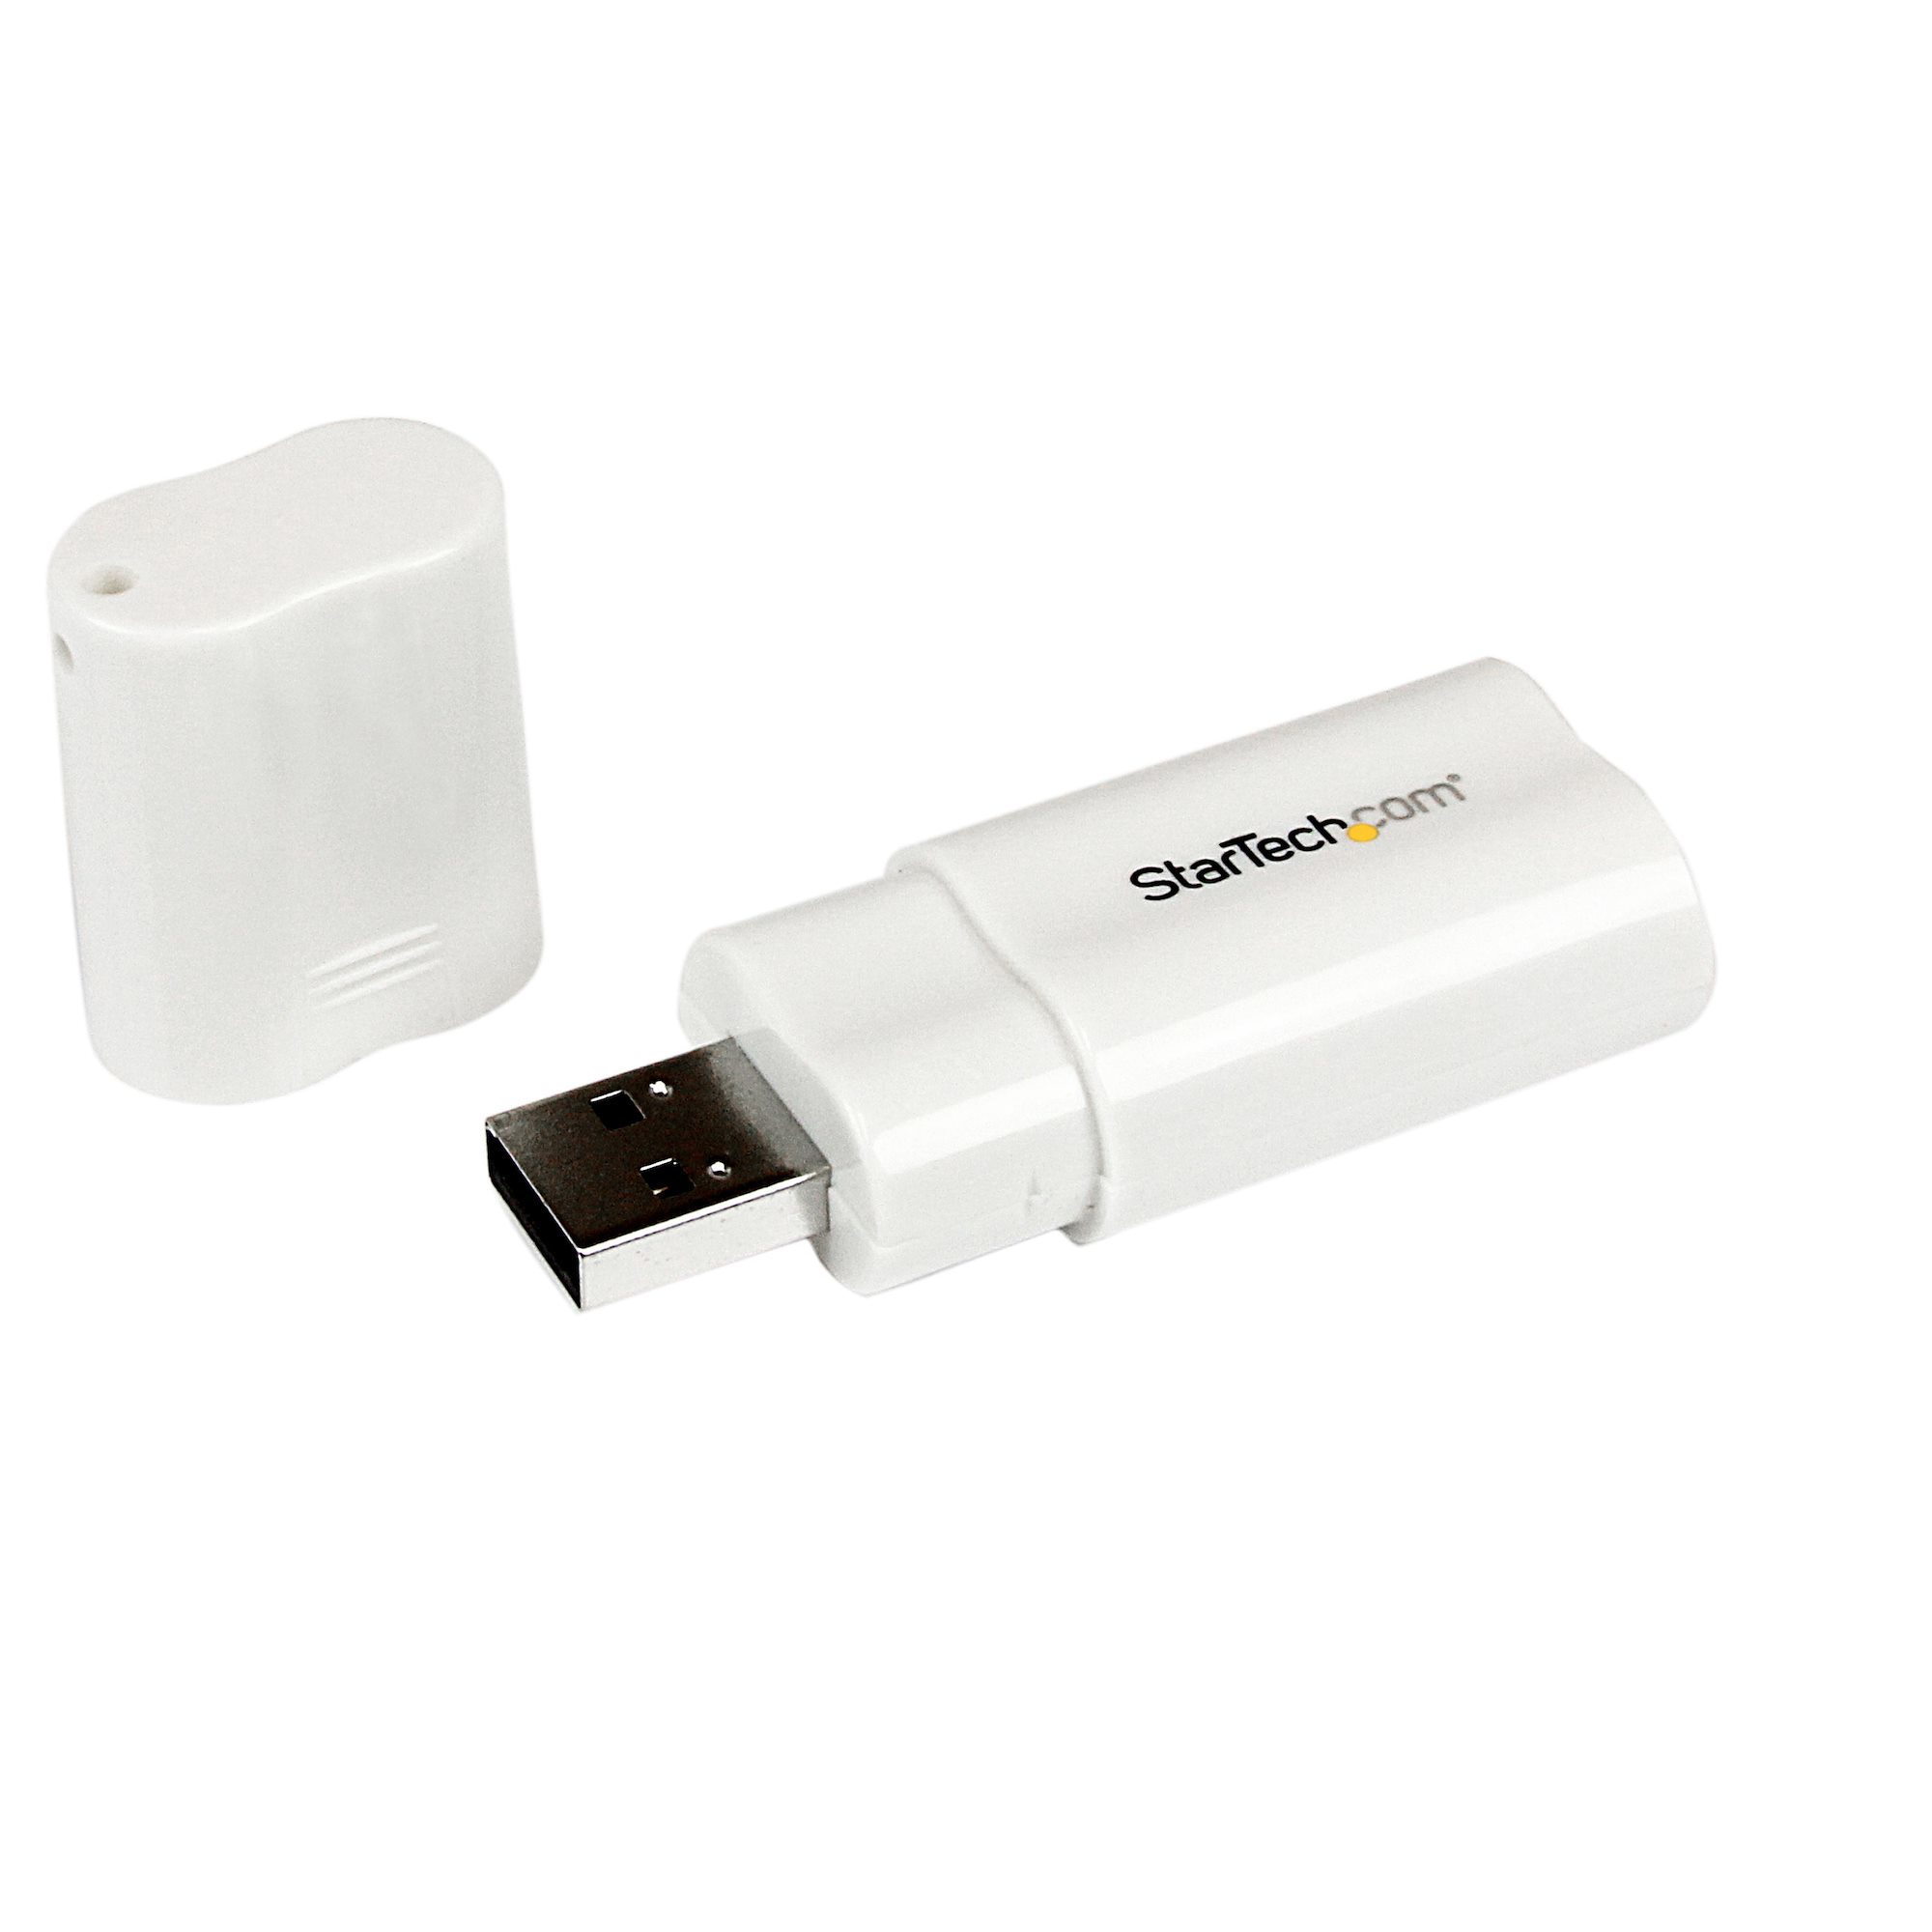 StarTech.com USB Audio Adapter - USB auf Soundkarte in weiß - Soundcard mit USB (Stecker)